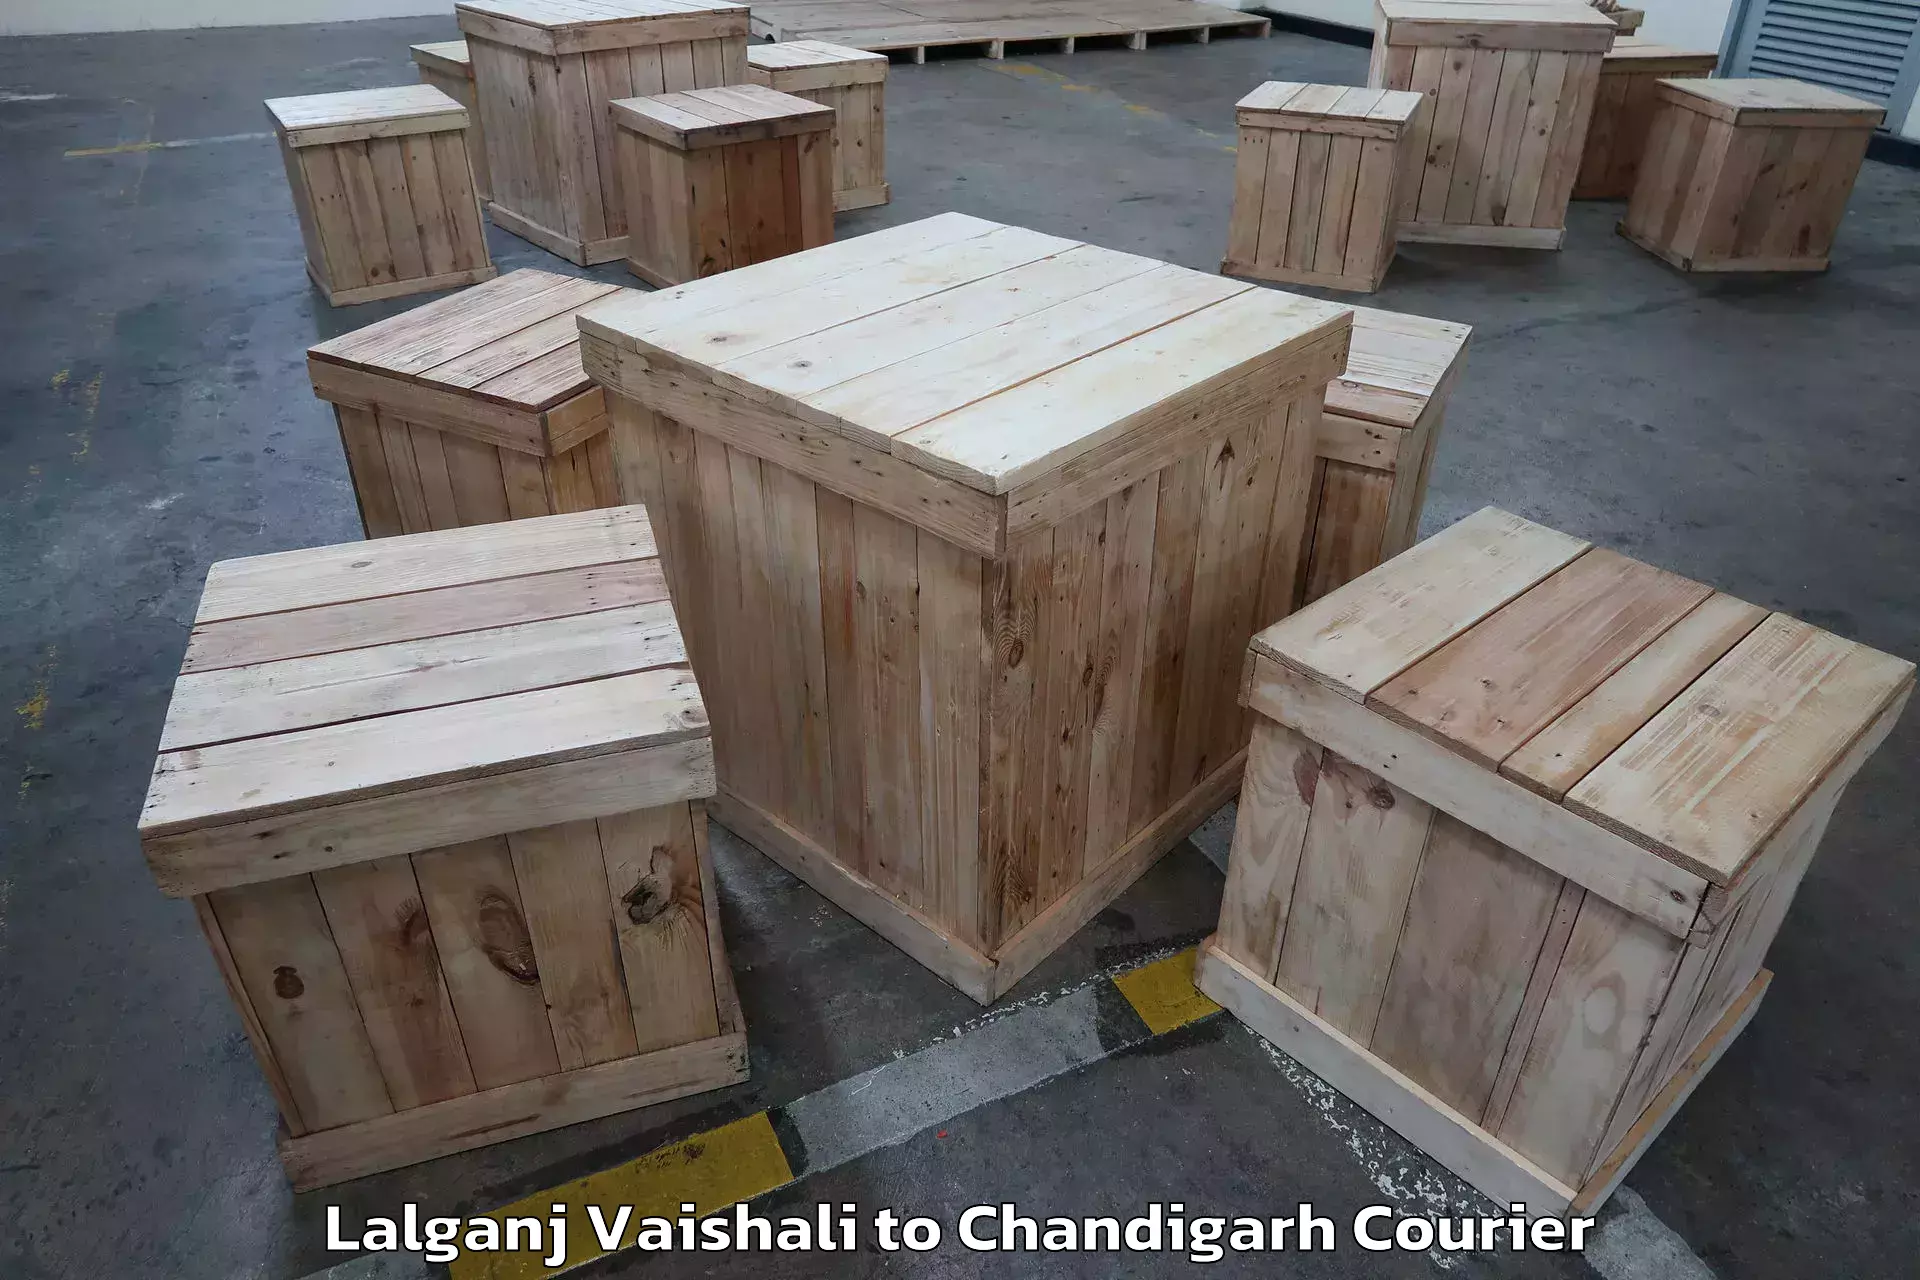 Specialized moving company Lalganj Vaishali to Chandigarh